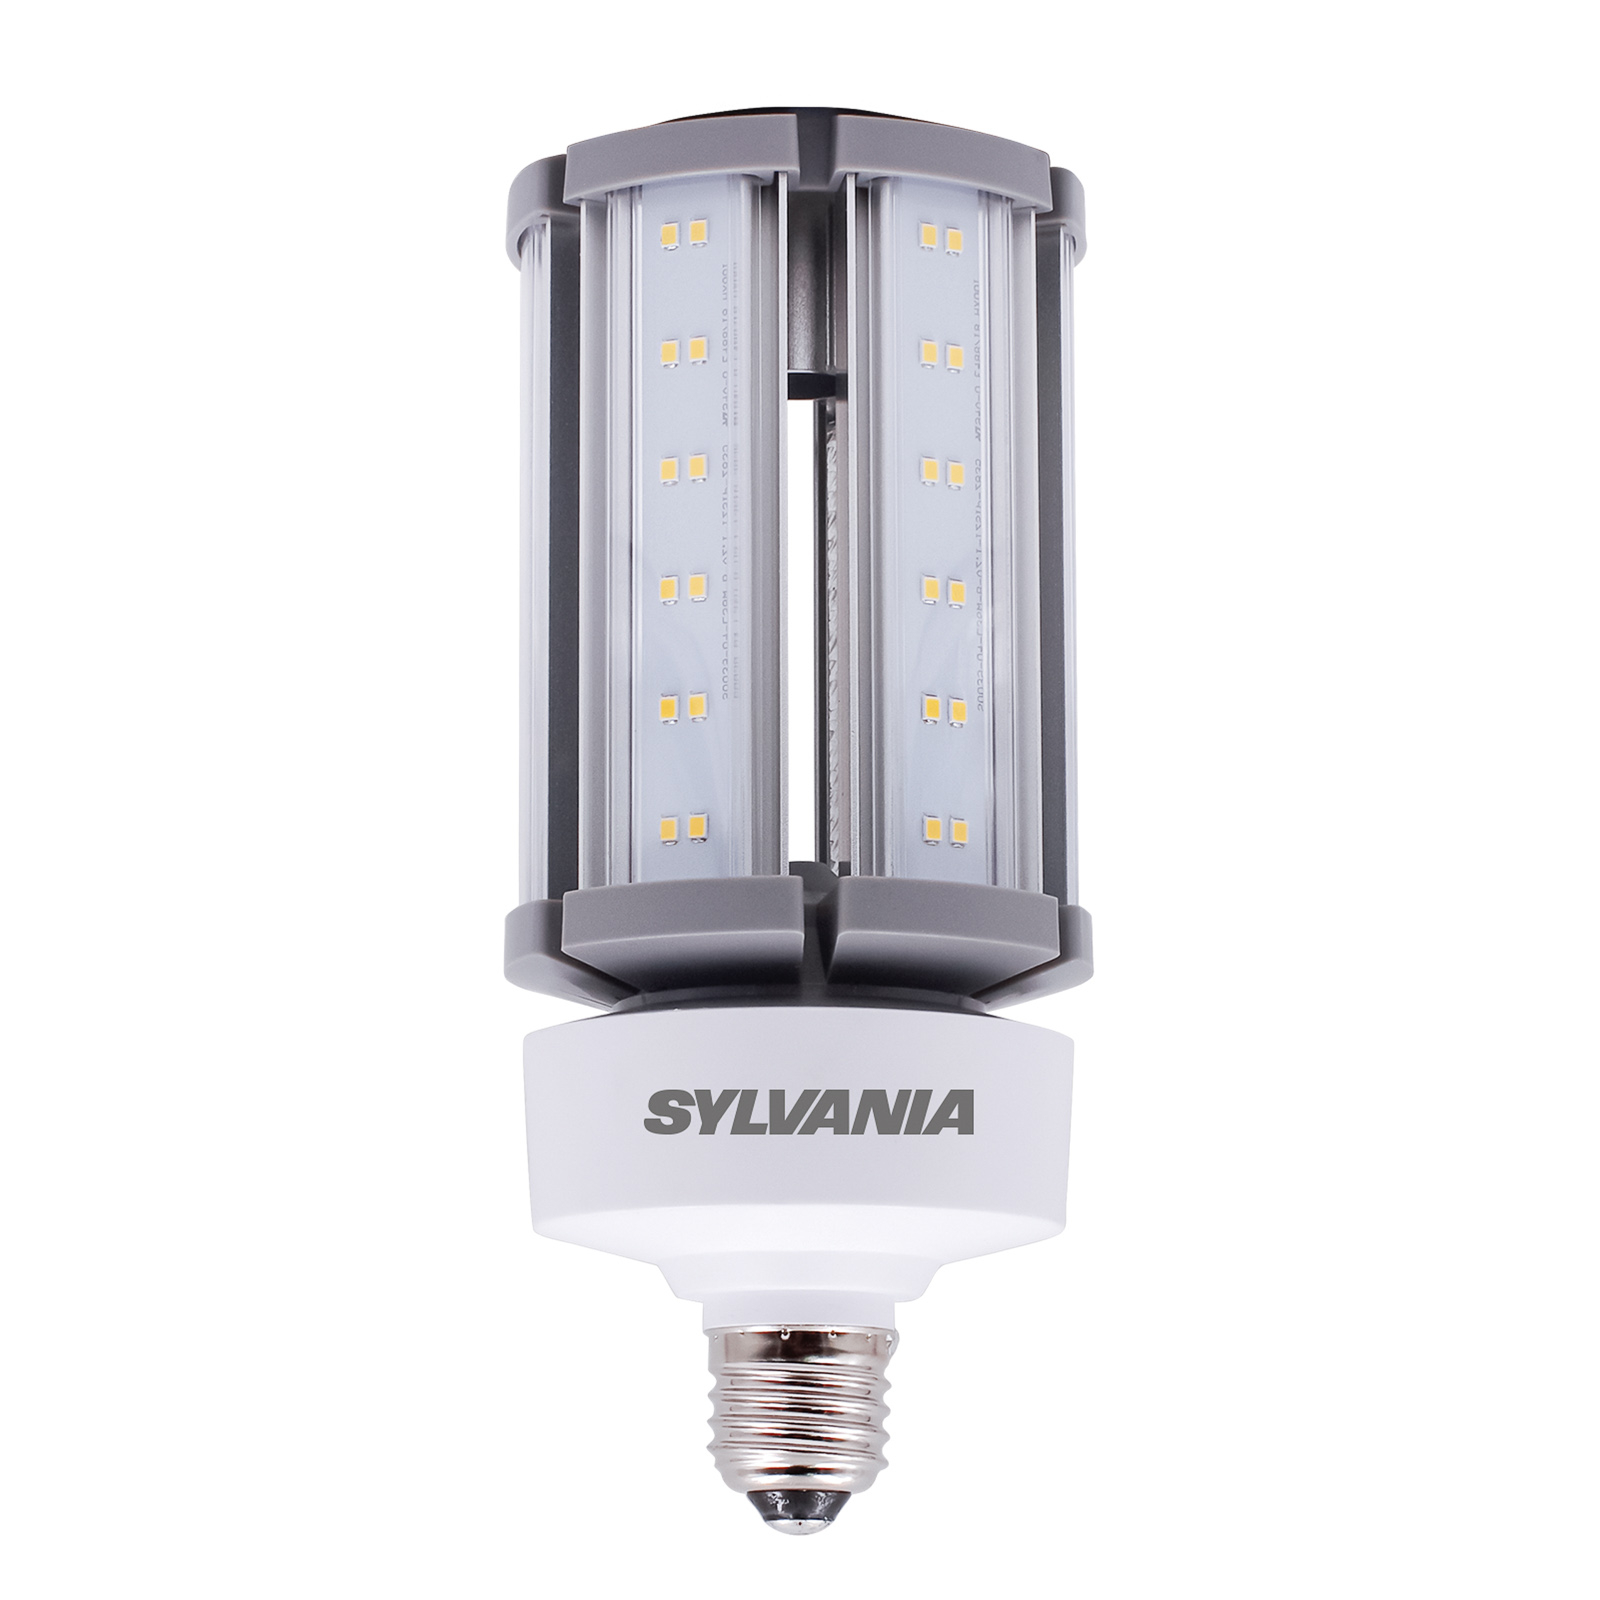 Overtreffen Draaien cent Sylvania LED lamp E27, 36W, 4.000 K, 4.500 lm | Lampen24.nl